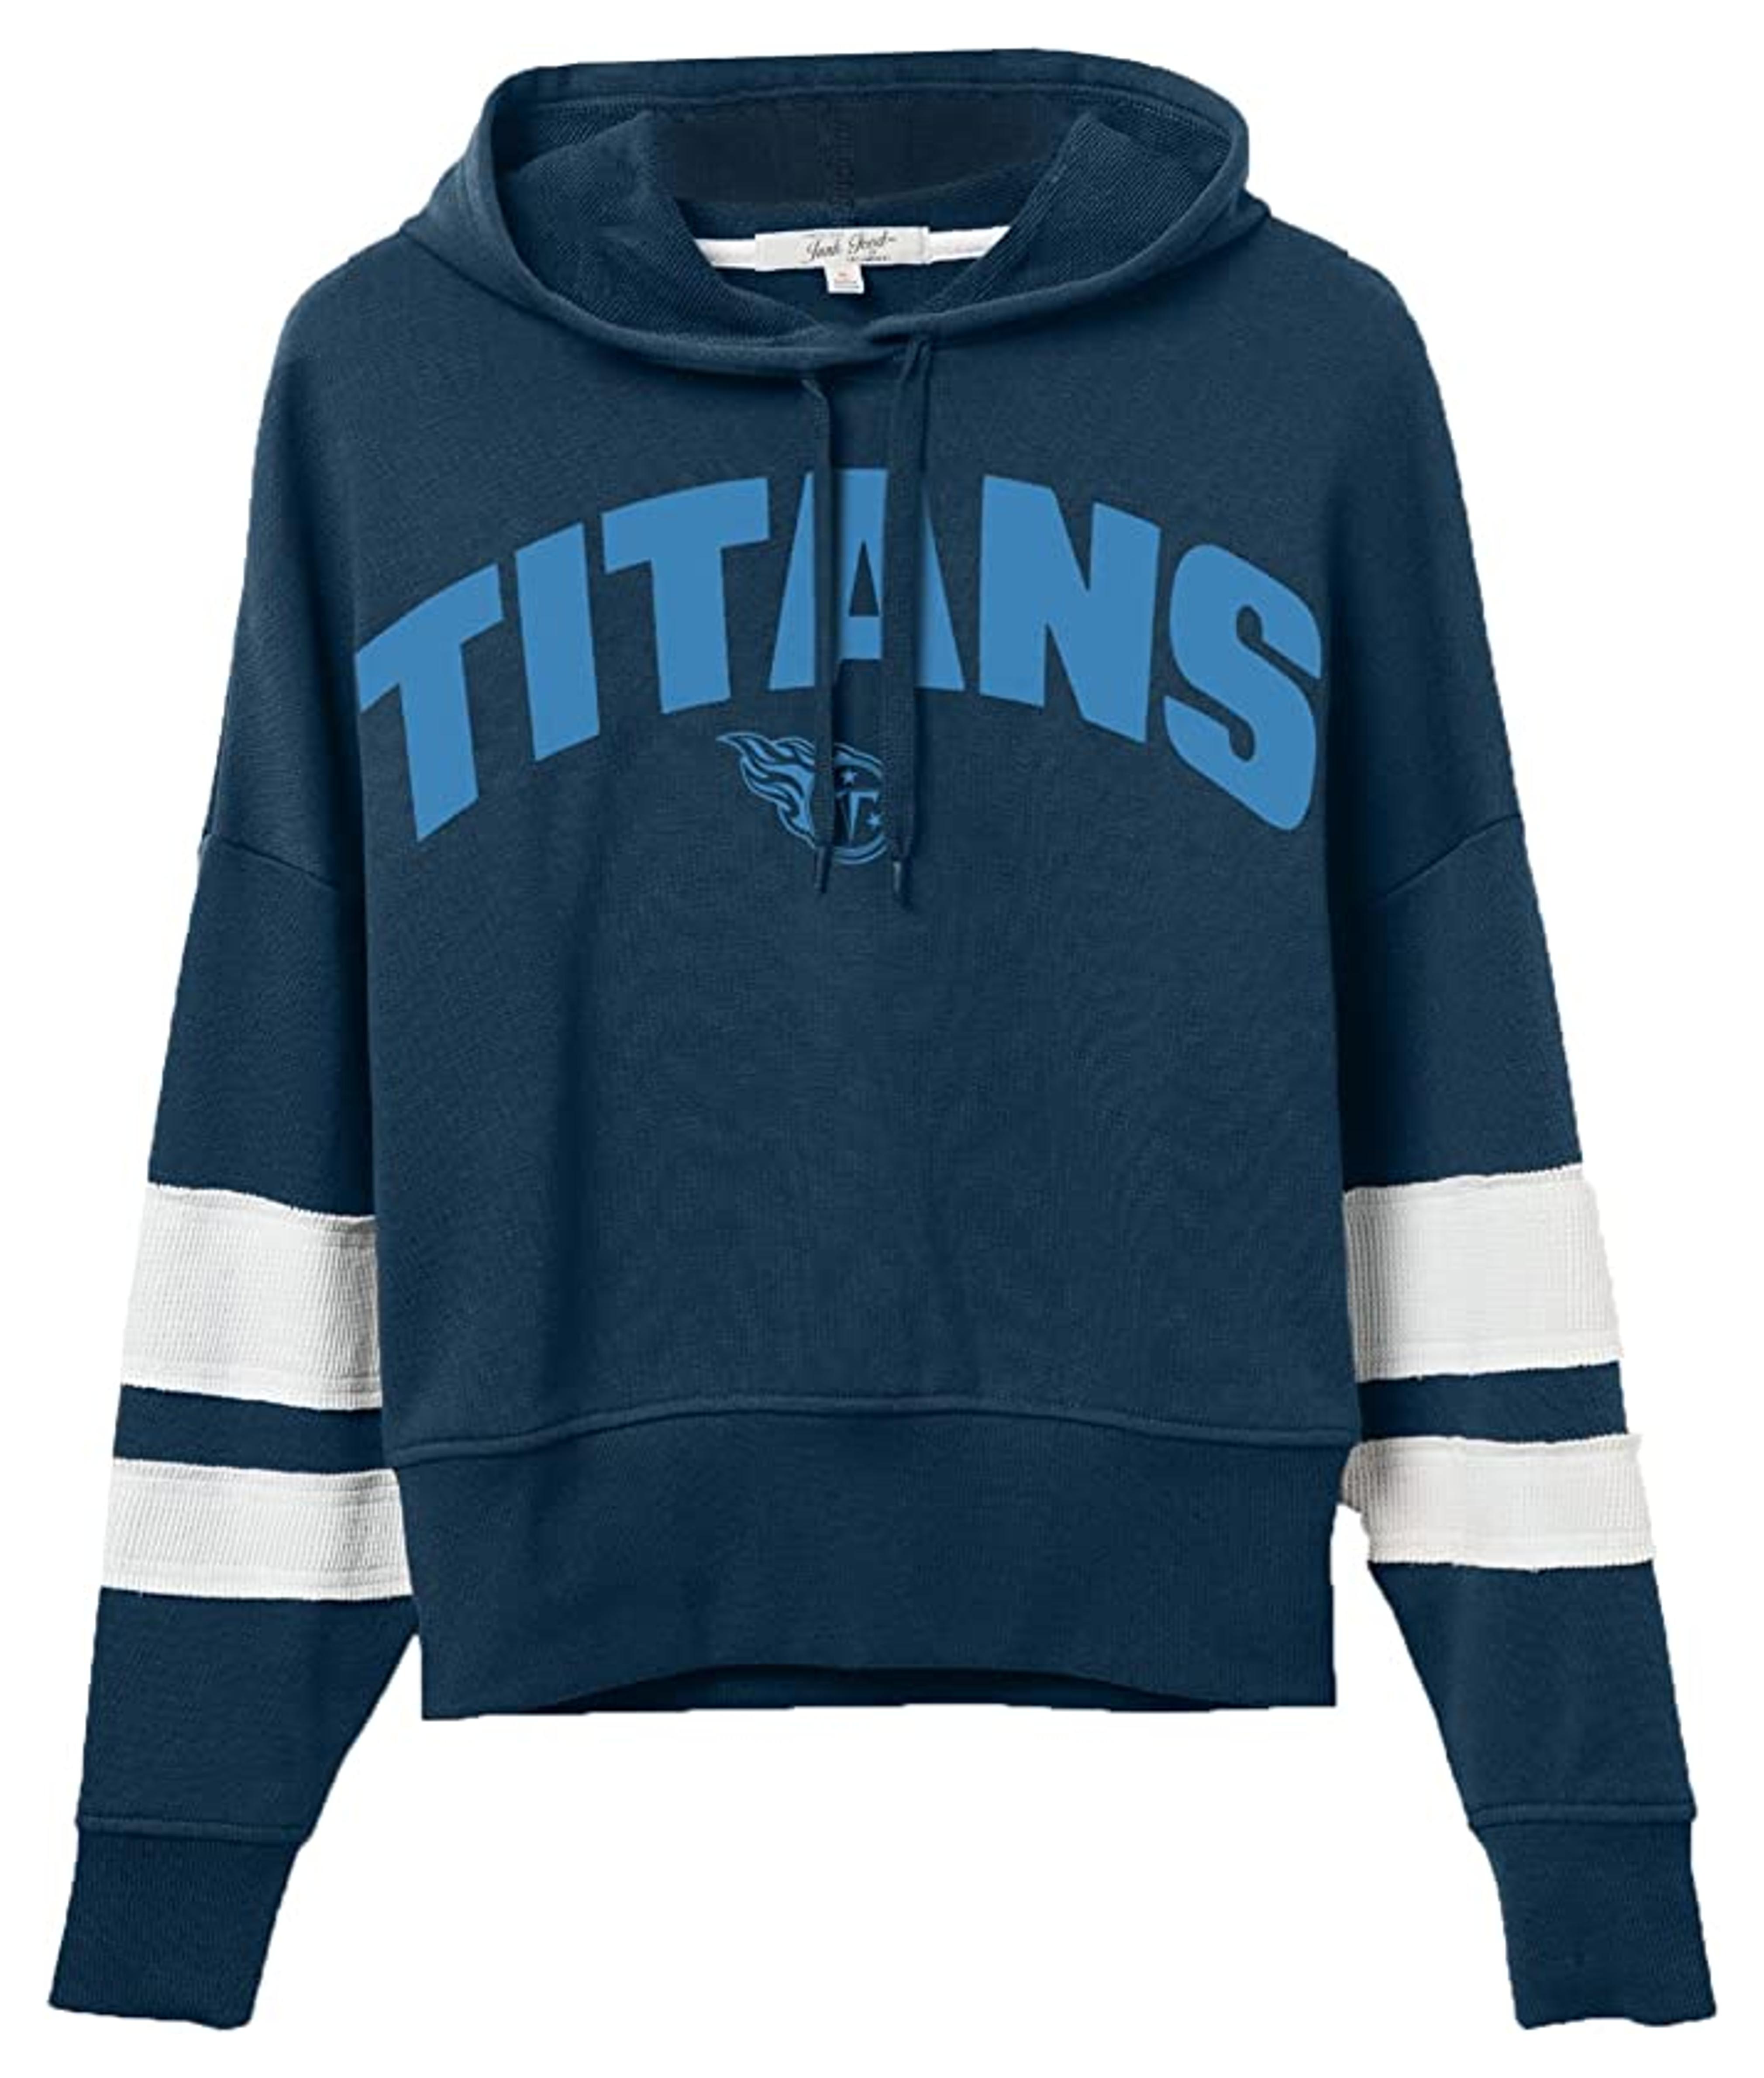 Amazon.com : Junk Food Clothing x NFL - Tennessee Titans - Sideline Stripe - Women's French Terry Hooded Fleece Sweatshirt - Size Medium : Sports & Outdoors